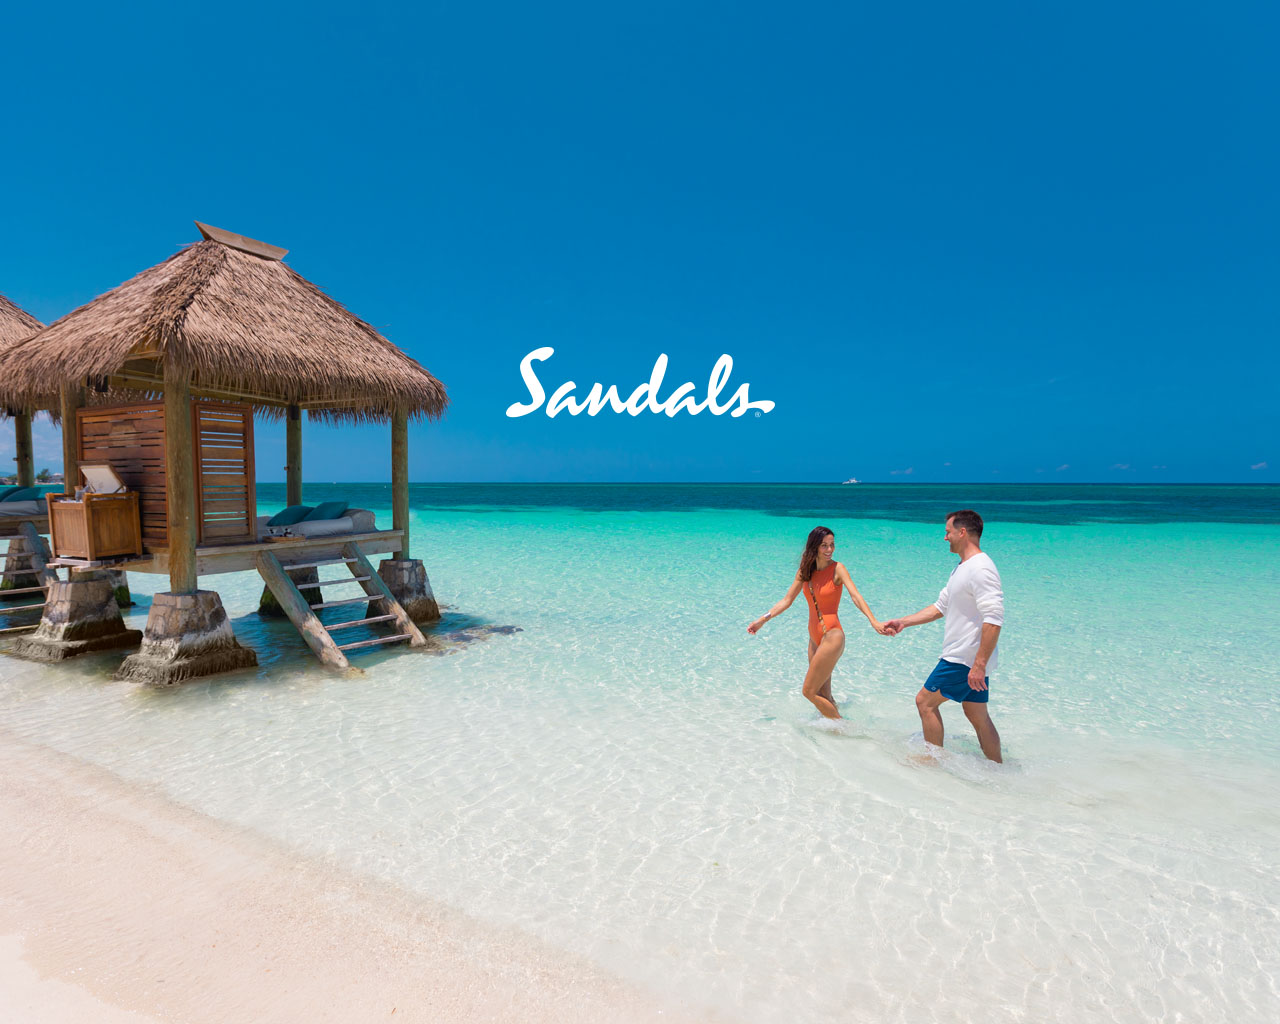 Sandals Halcyon Beach Resort, St. Lucia, Caribbean Holidays